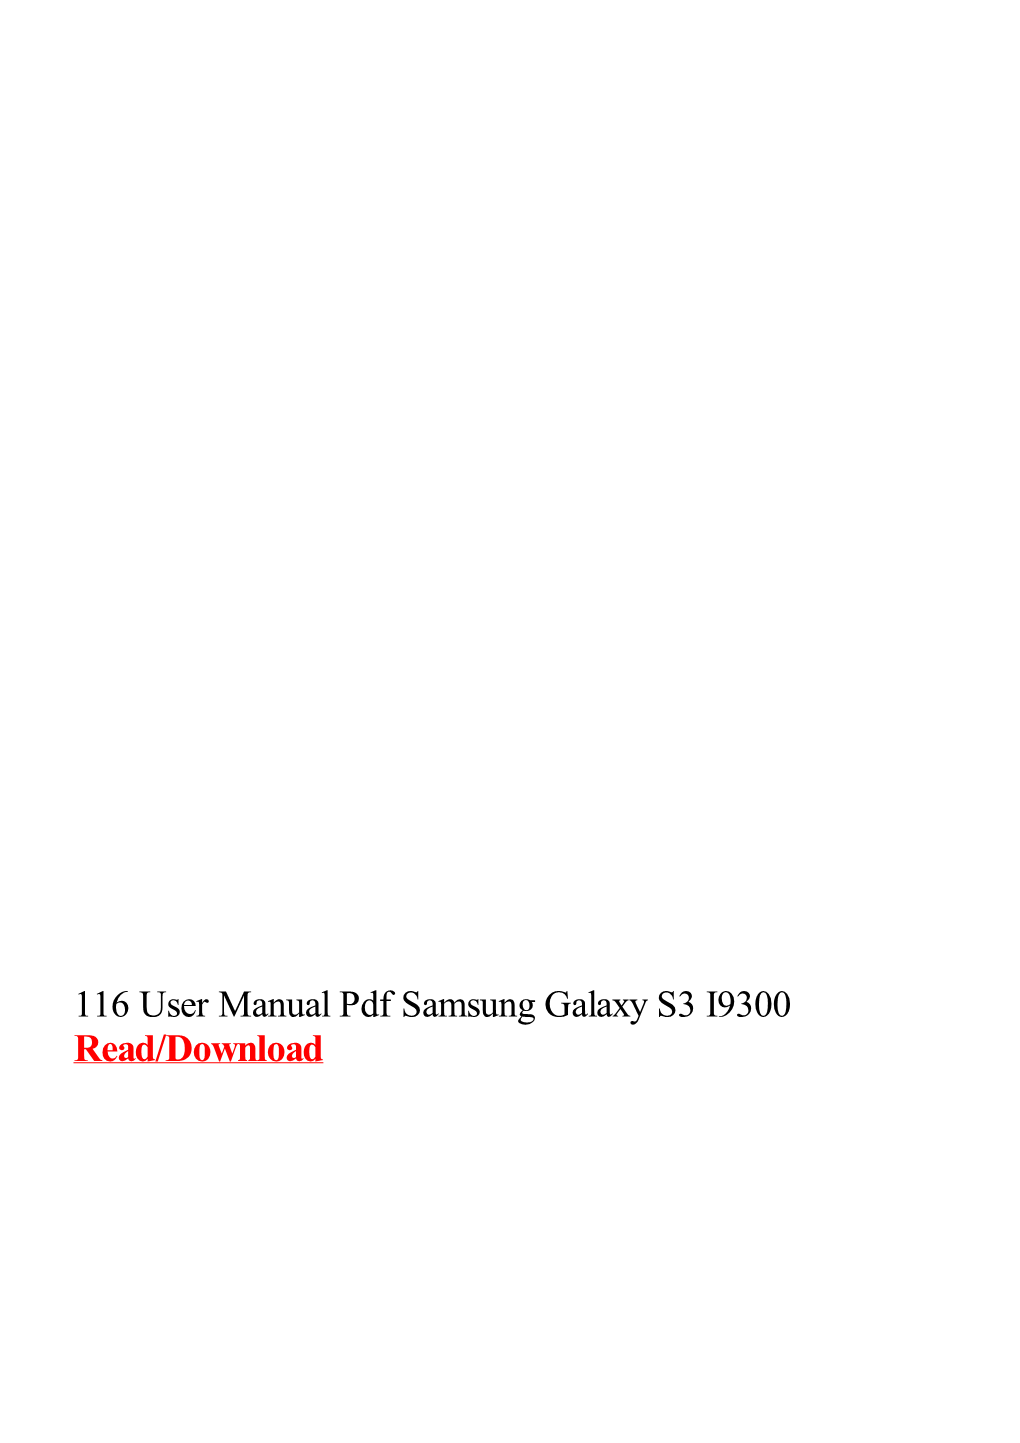 116 User Manual Pdf Samsung Galaxy S3 I9300